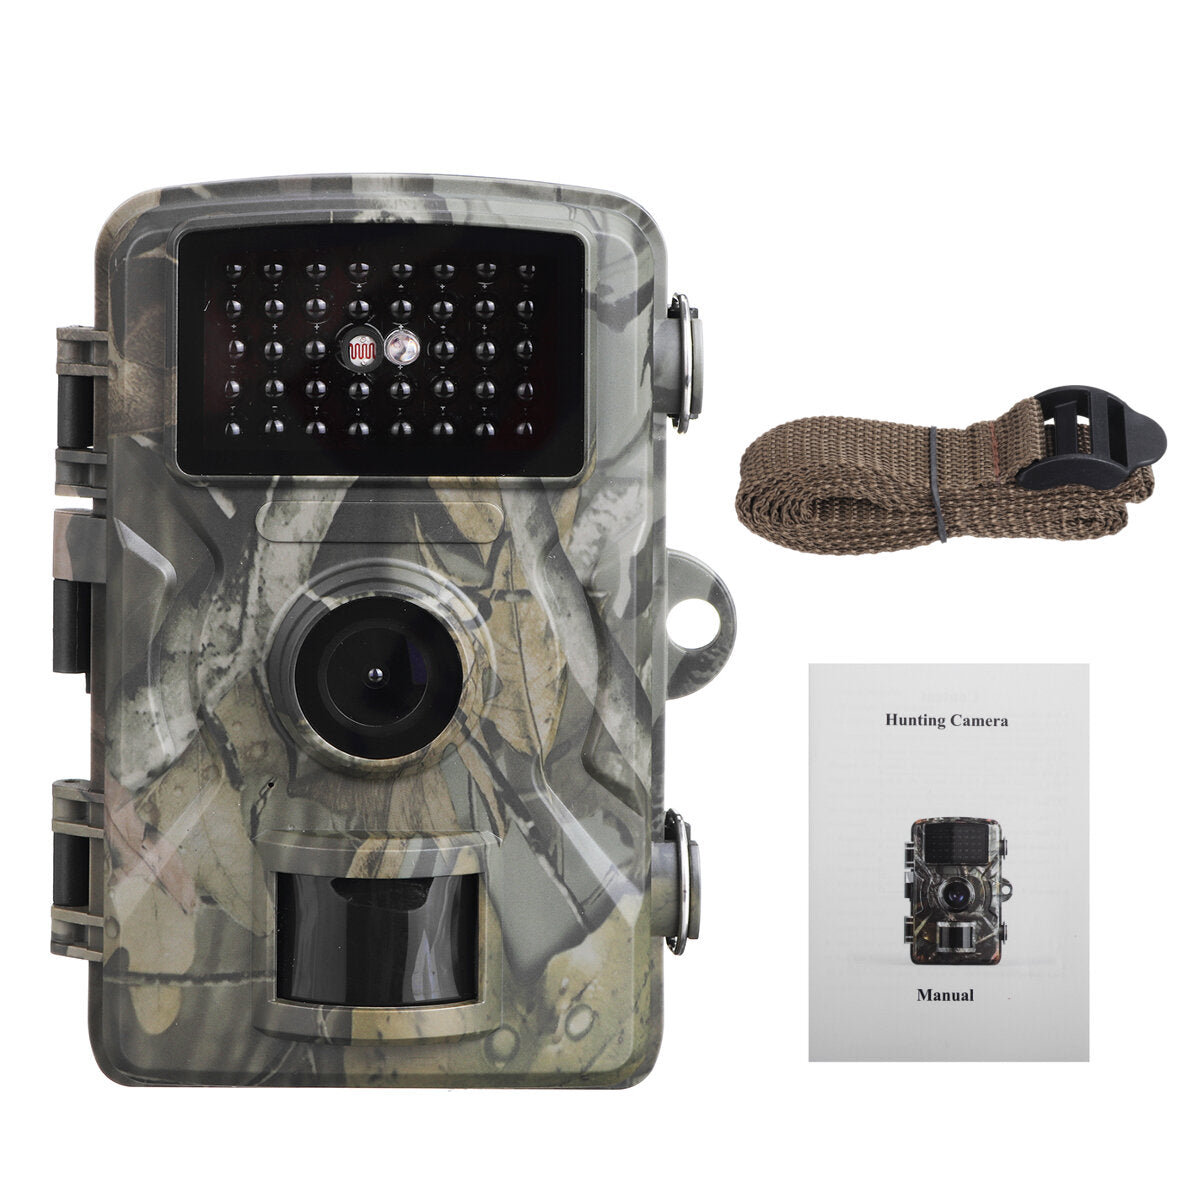 HD 2 inch Screen Hunting Camera IR Night Vision 16MP 1080P Waterproof Scouting Camera Monitoring Protecting Farms Safety